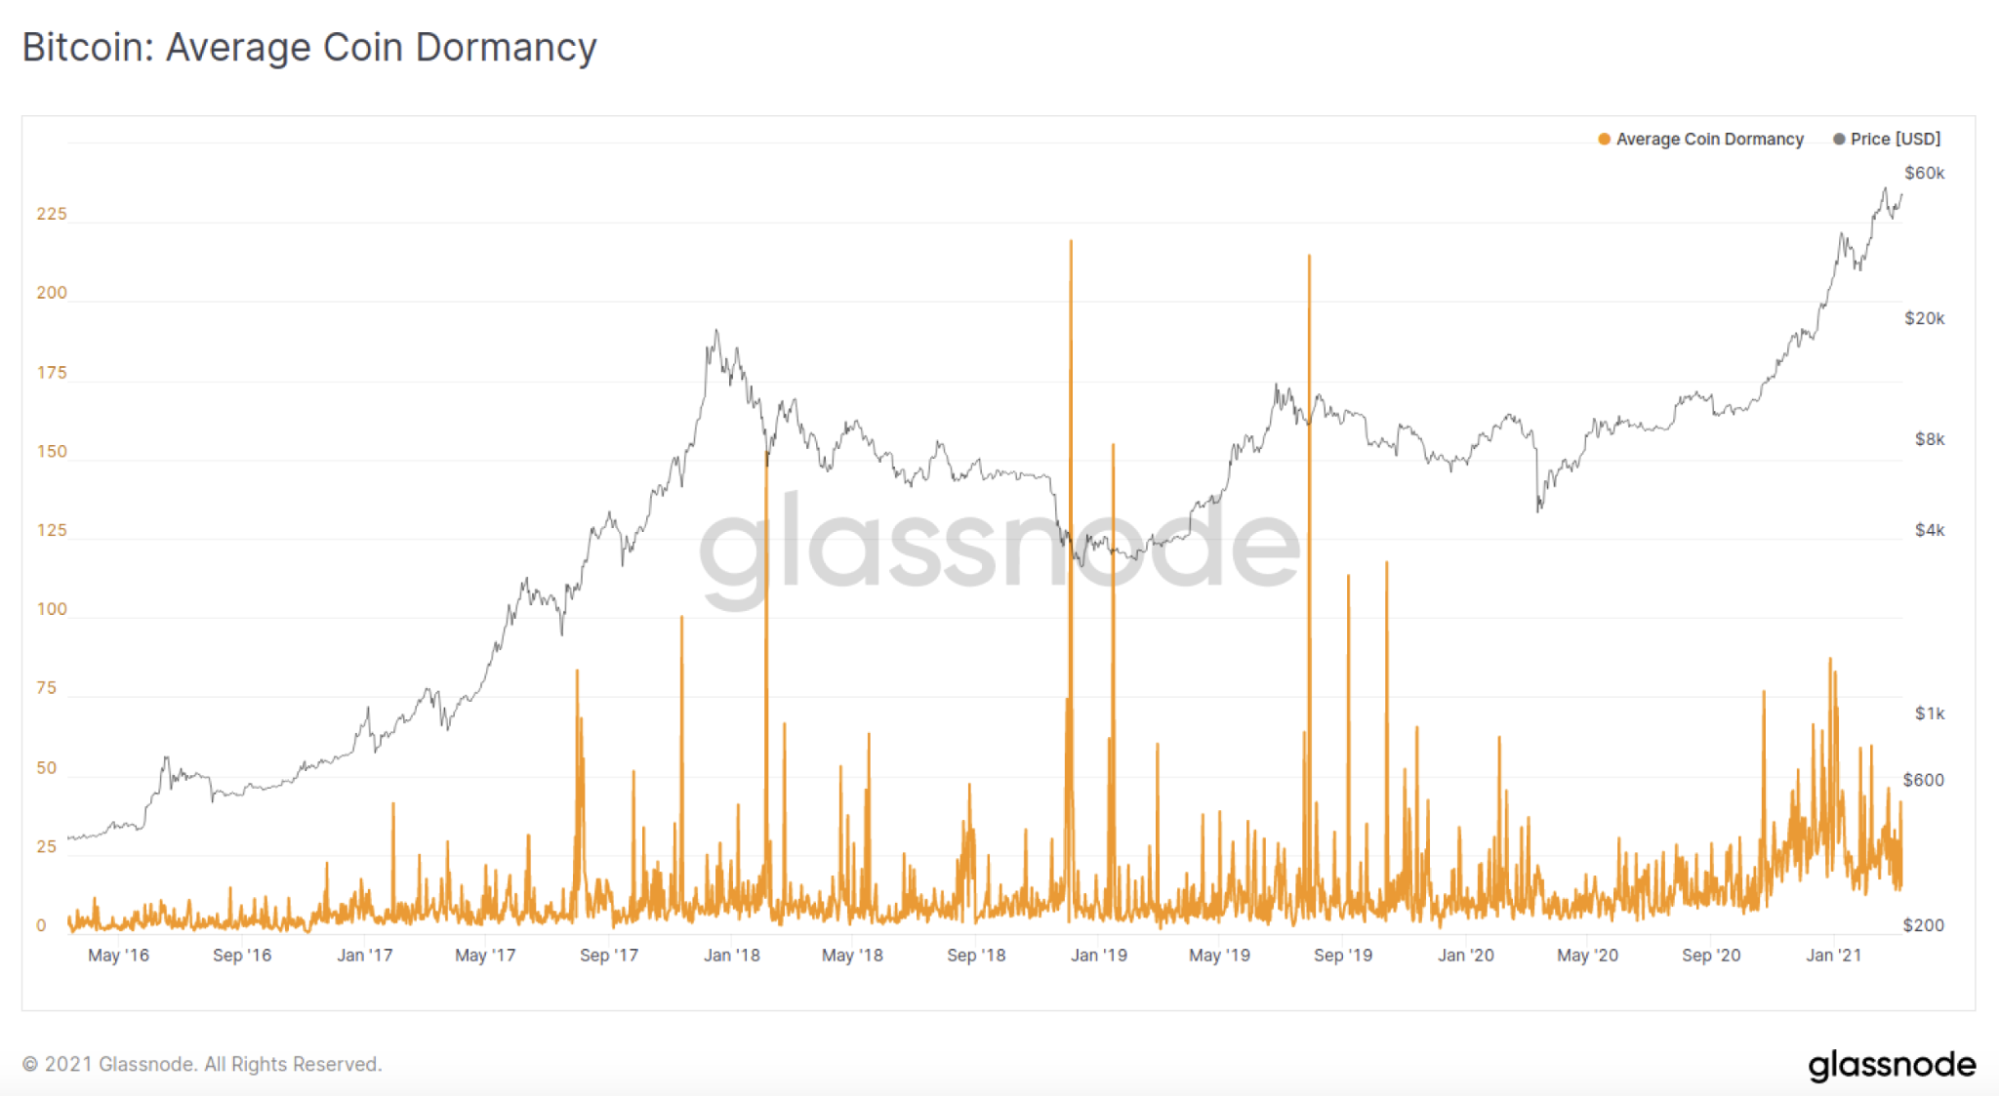 Bitcoin: Average Coin Dormancy (source : glassnode.com)